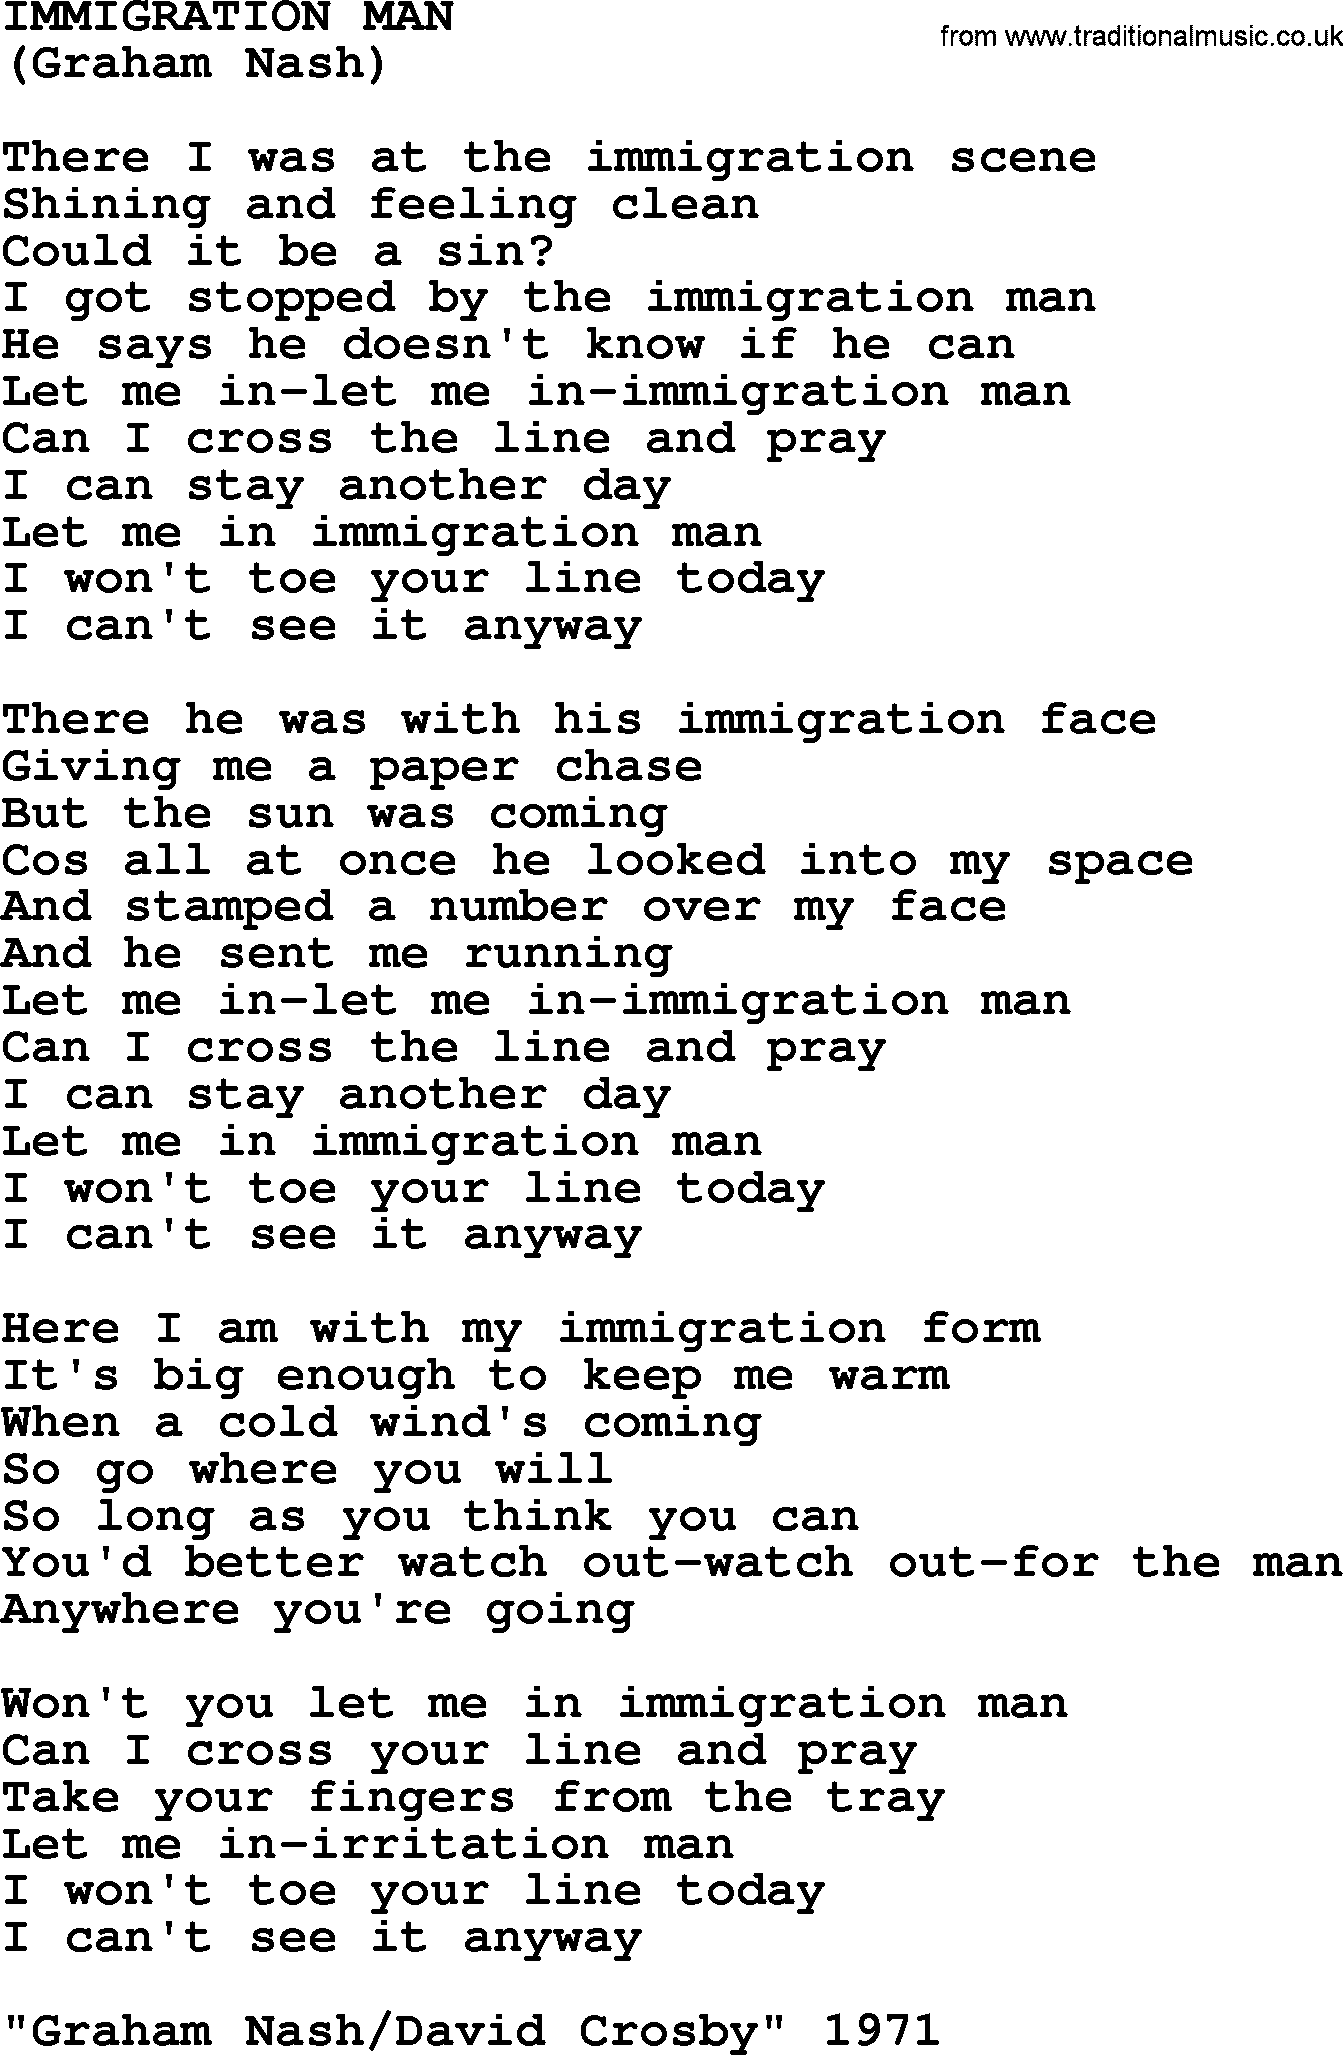 The Byrds song Immigration Man, lyrics